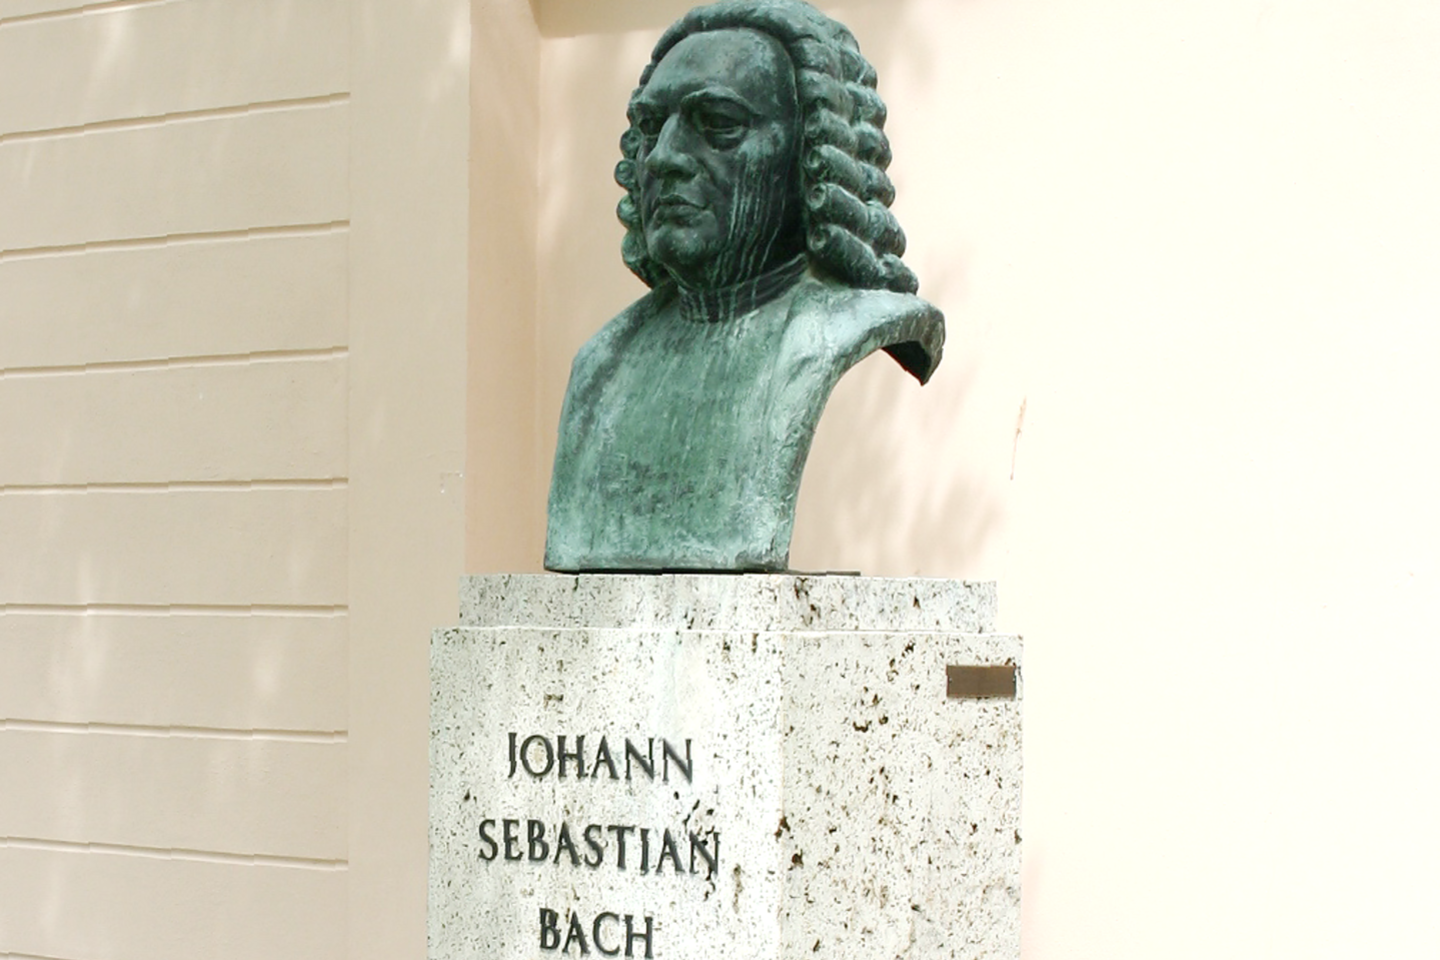  J.S. Bacho paminklas Veimare.